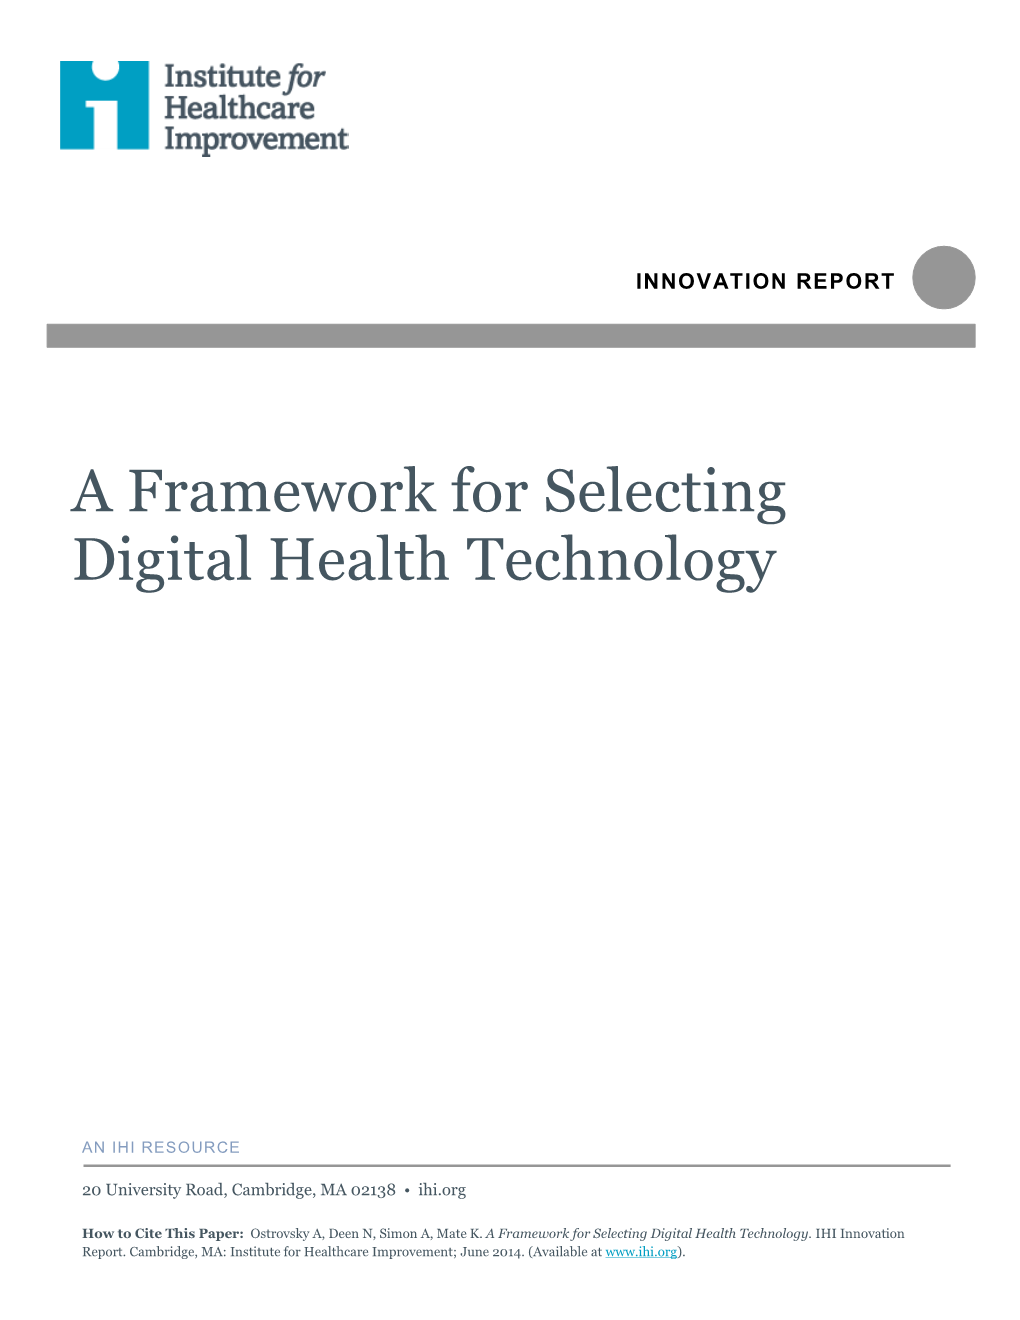 A Framework for Selecting Digital Health Technology